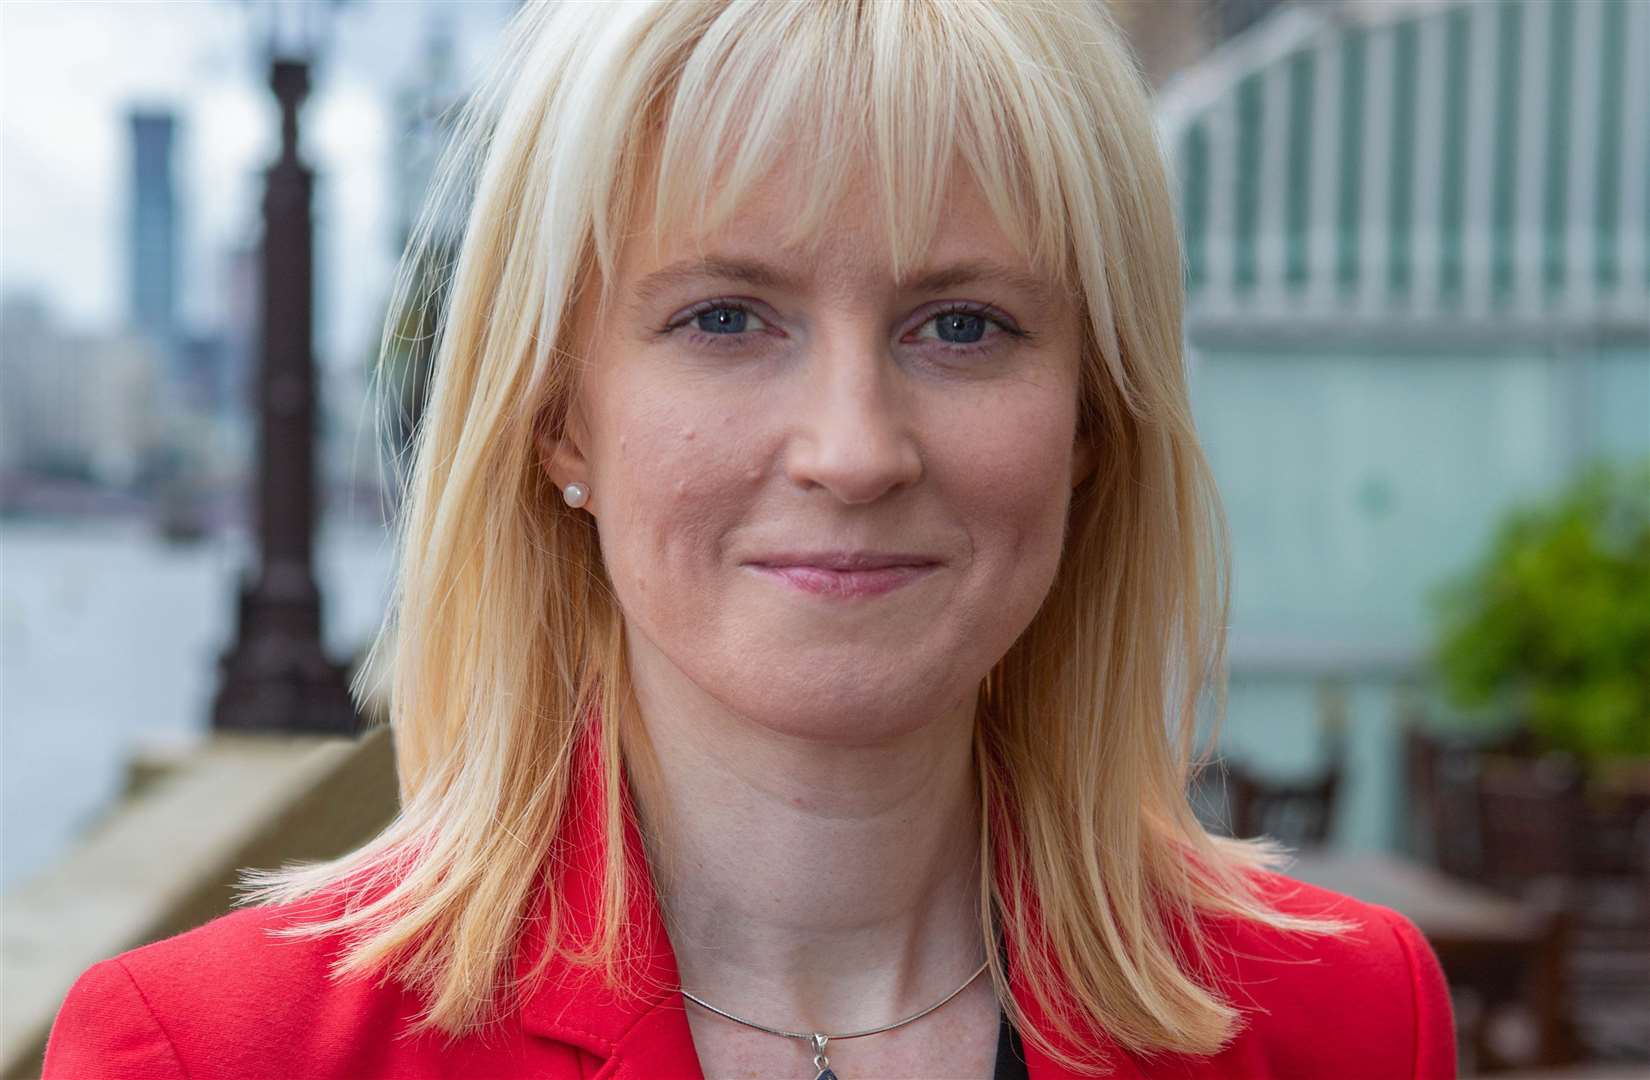 Labour MP Rosie Duffield